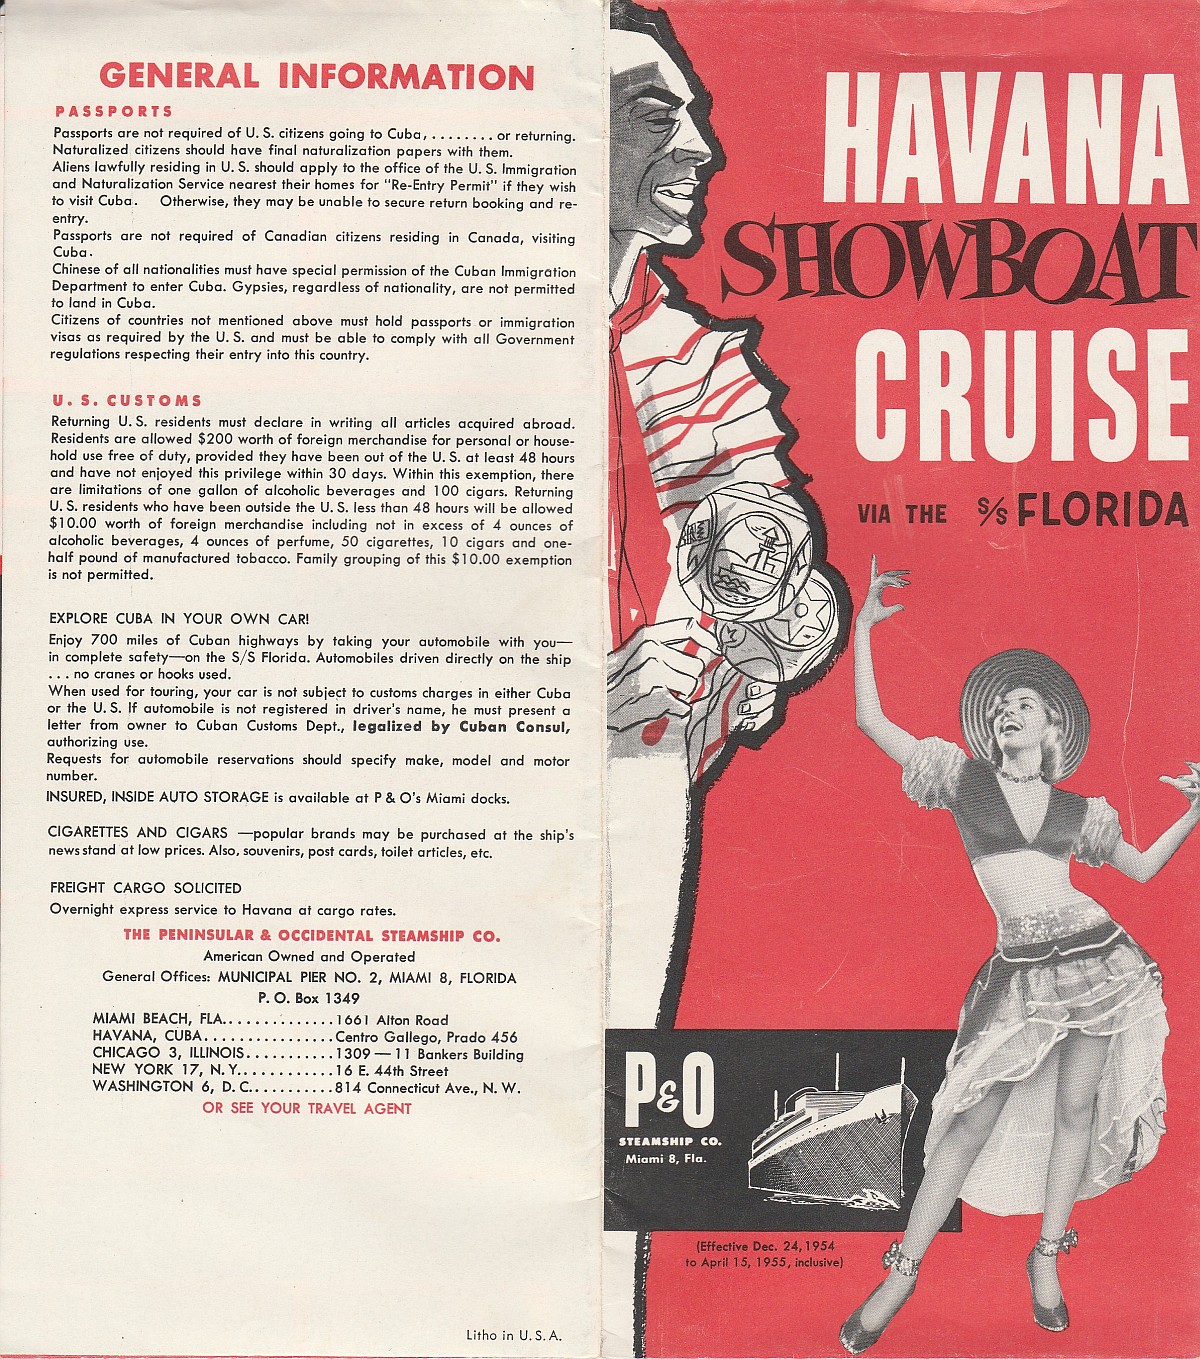 ss Florida effective Dec. 24, 1954: Havana Showboat Cruise via the ss Florida; general information